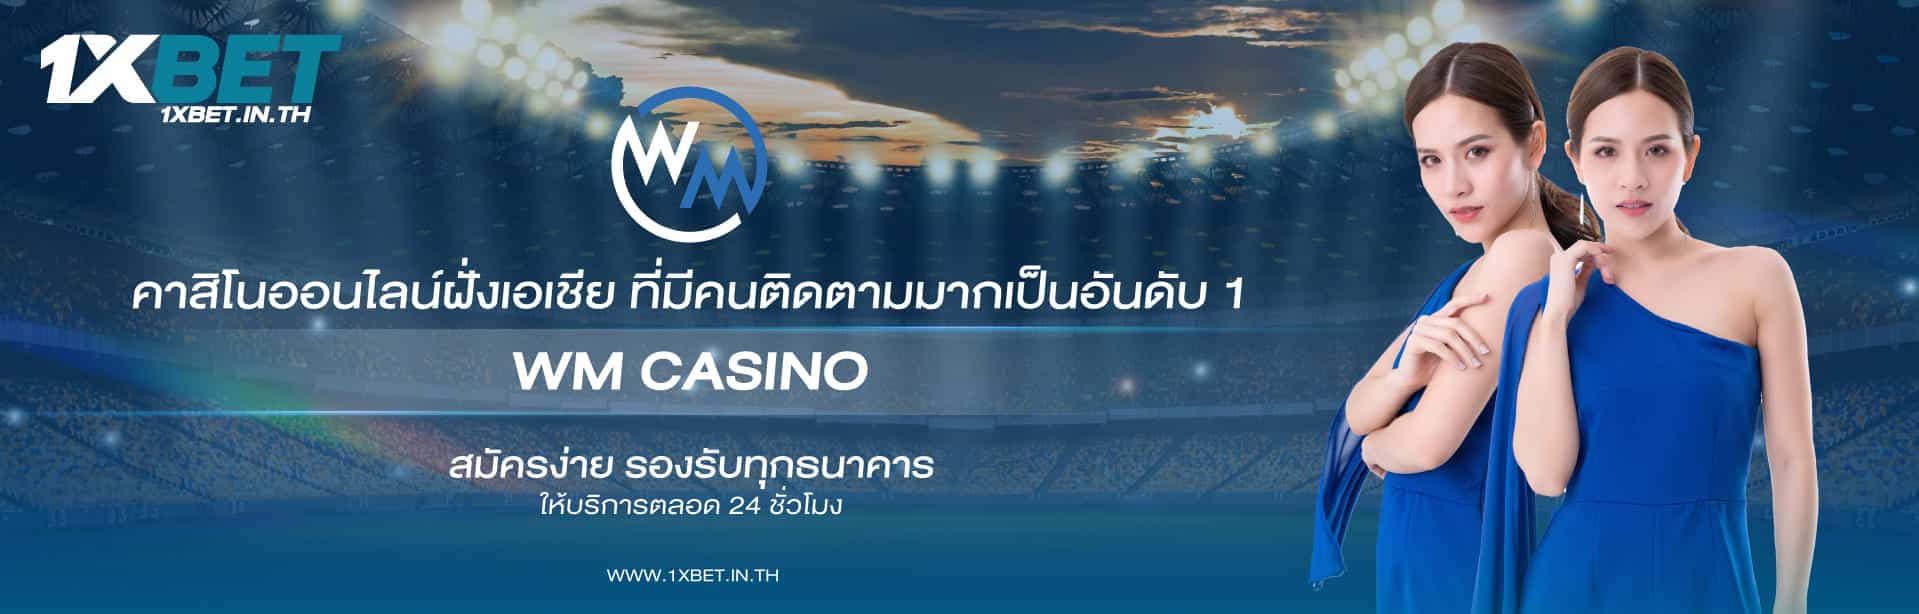 WM Casino PC